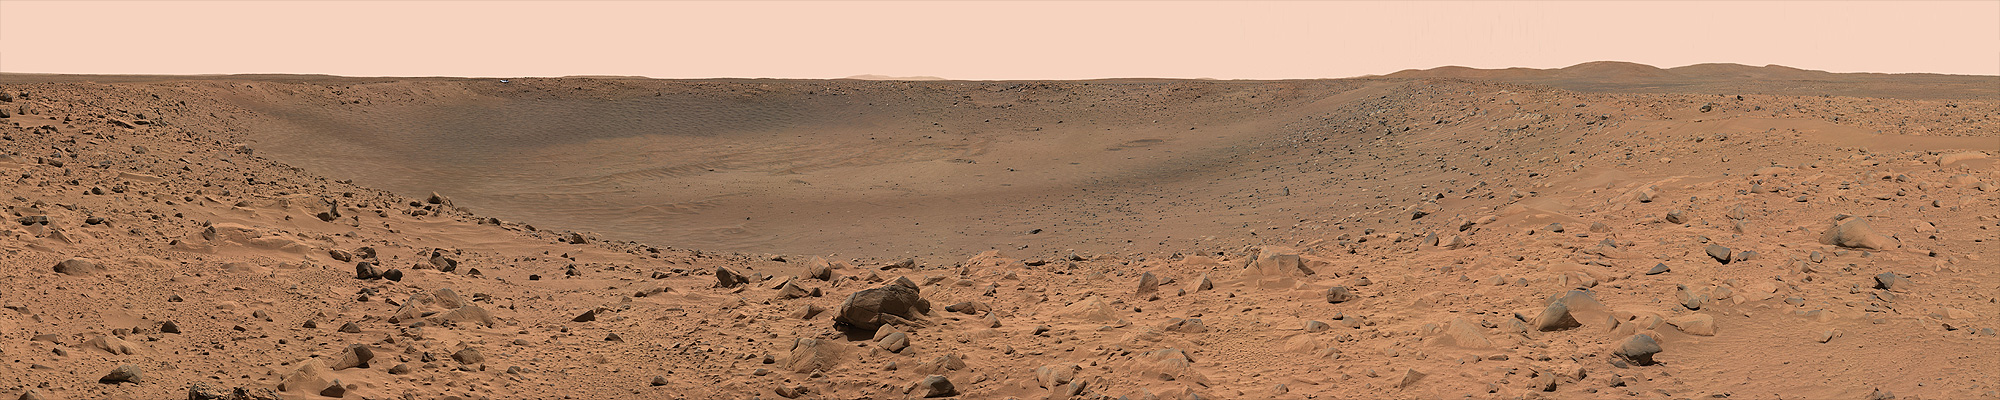 Mars Rover Spirit Destination   Panorama